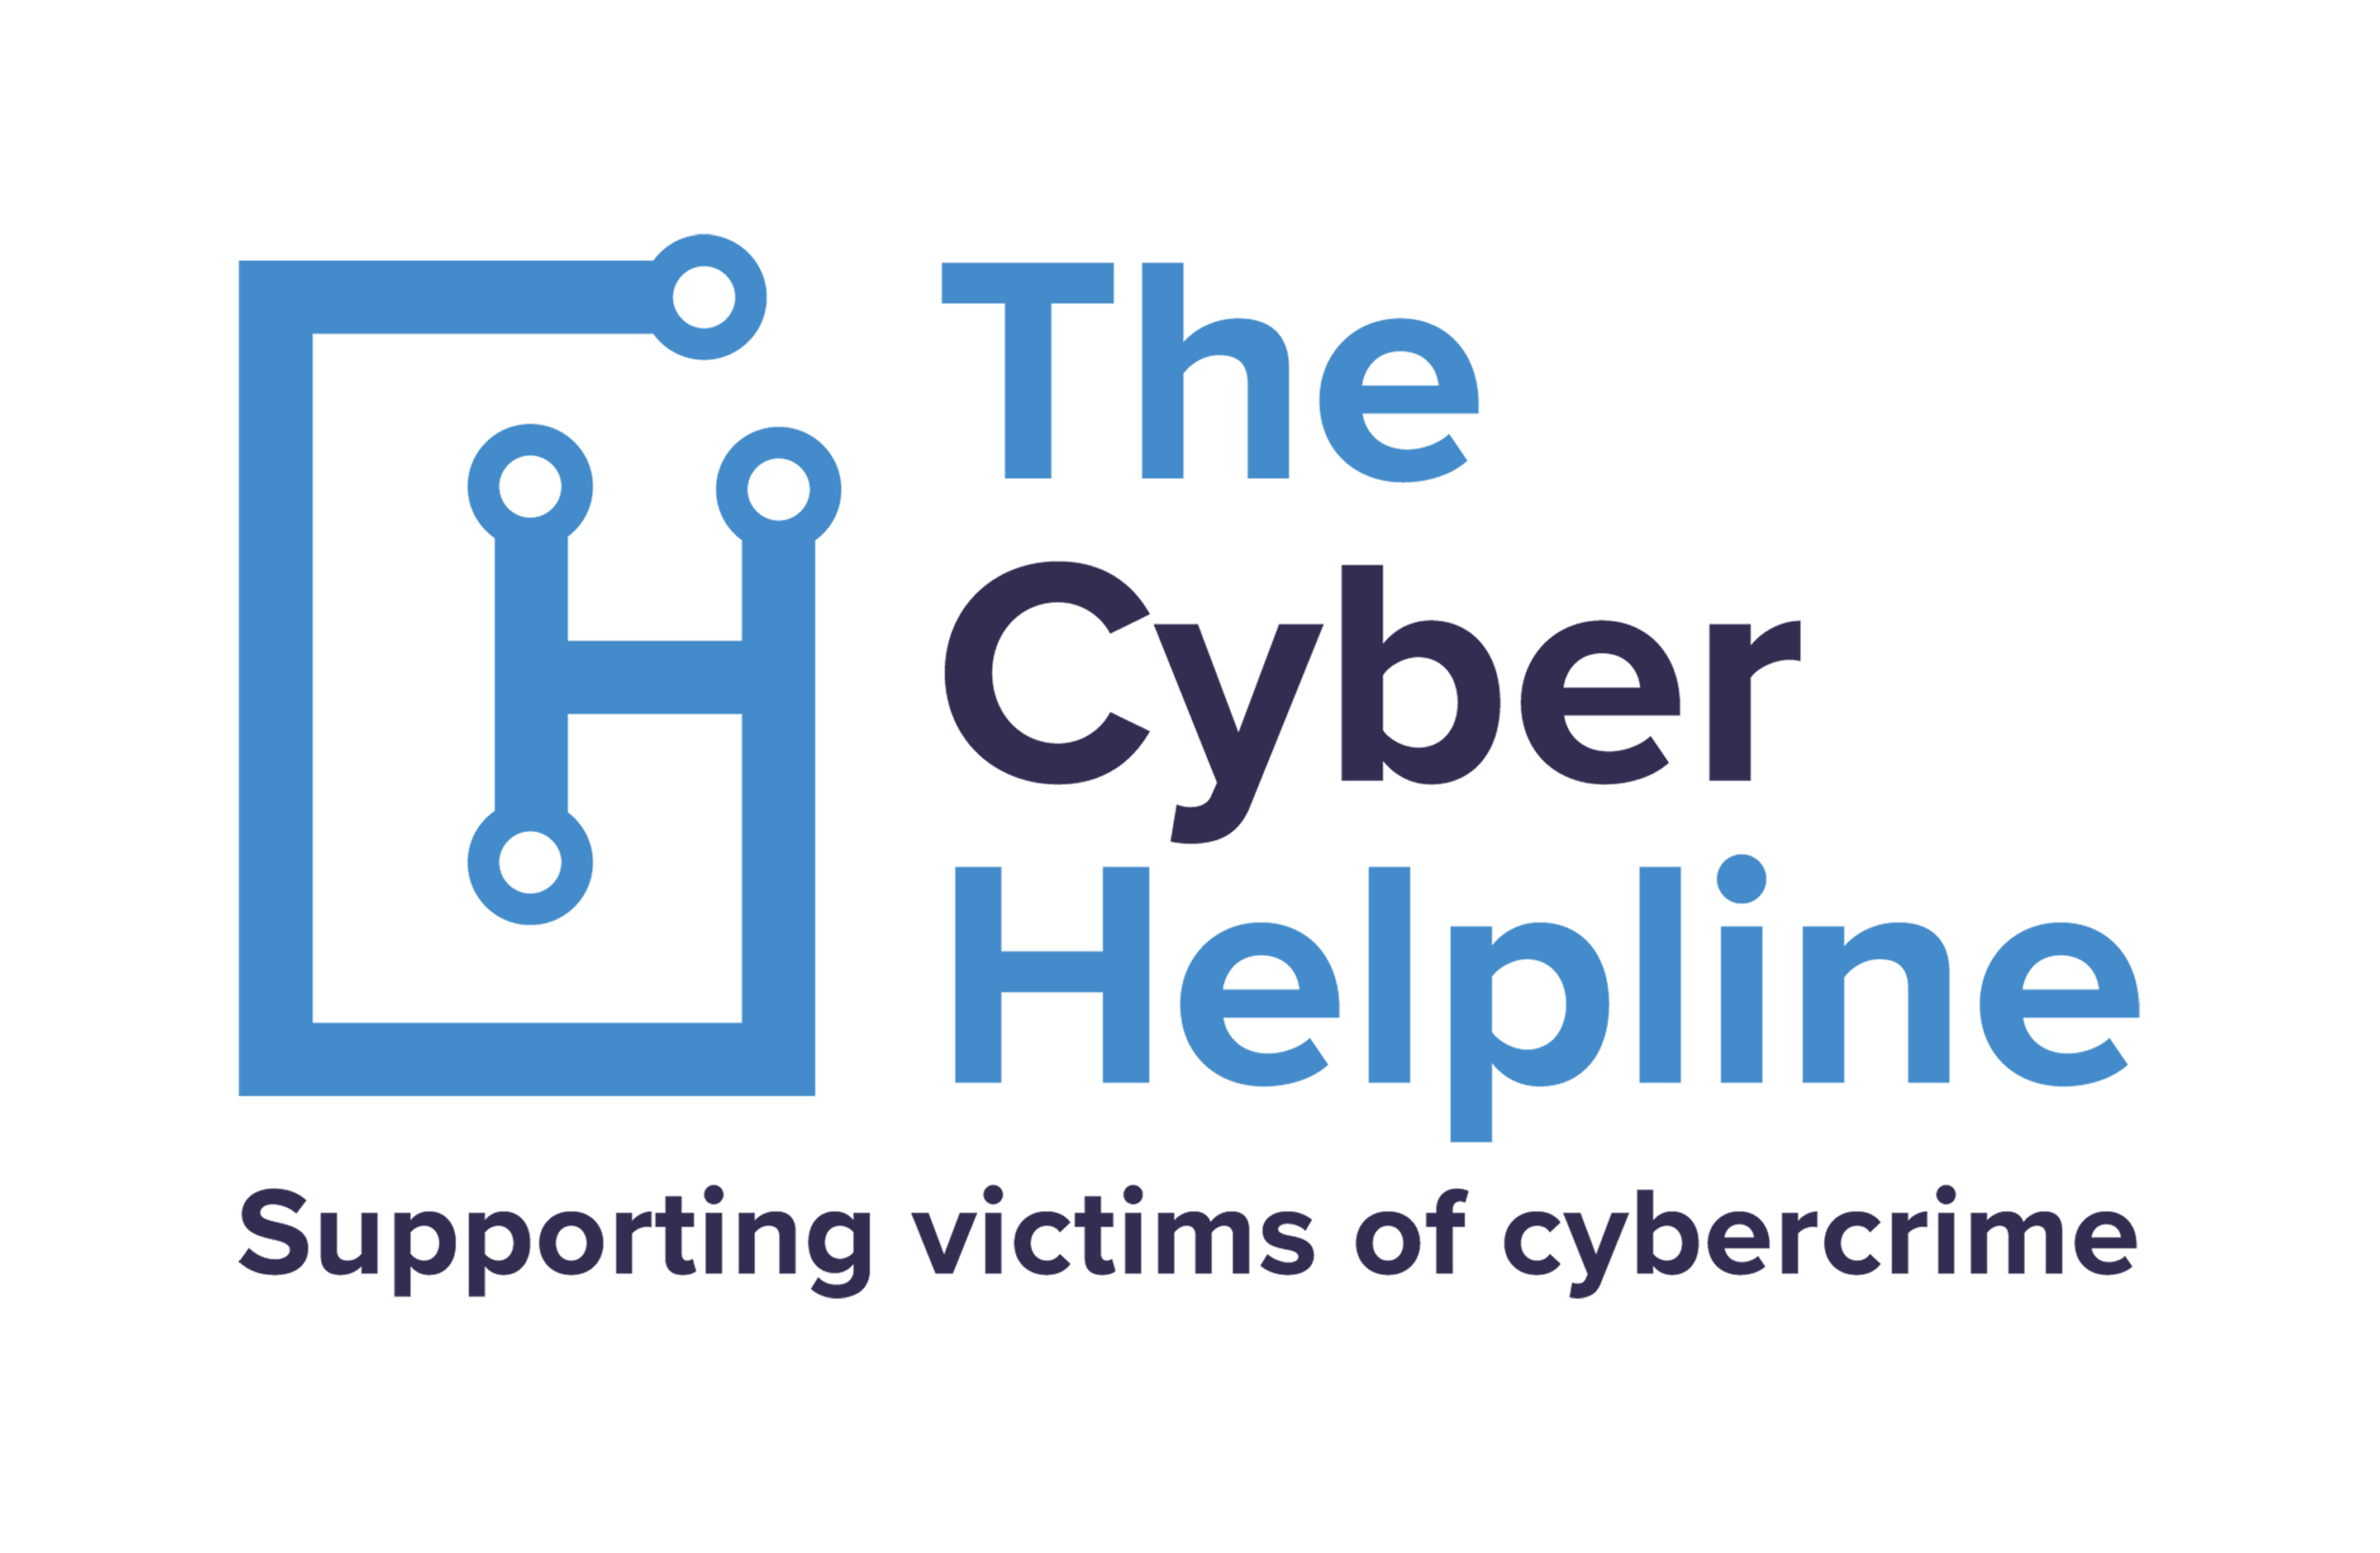 The Cyber Helpline